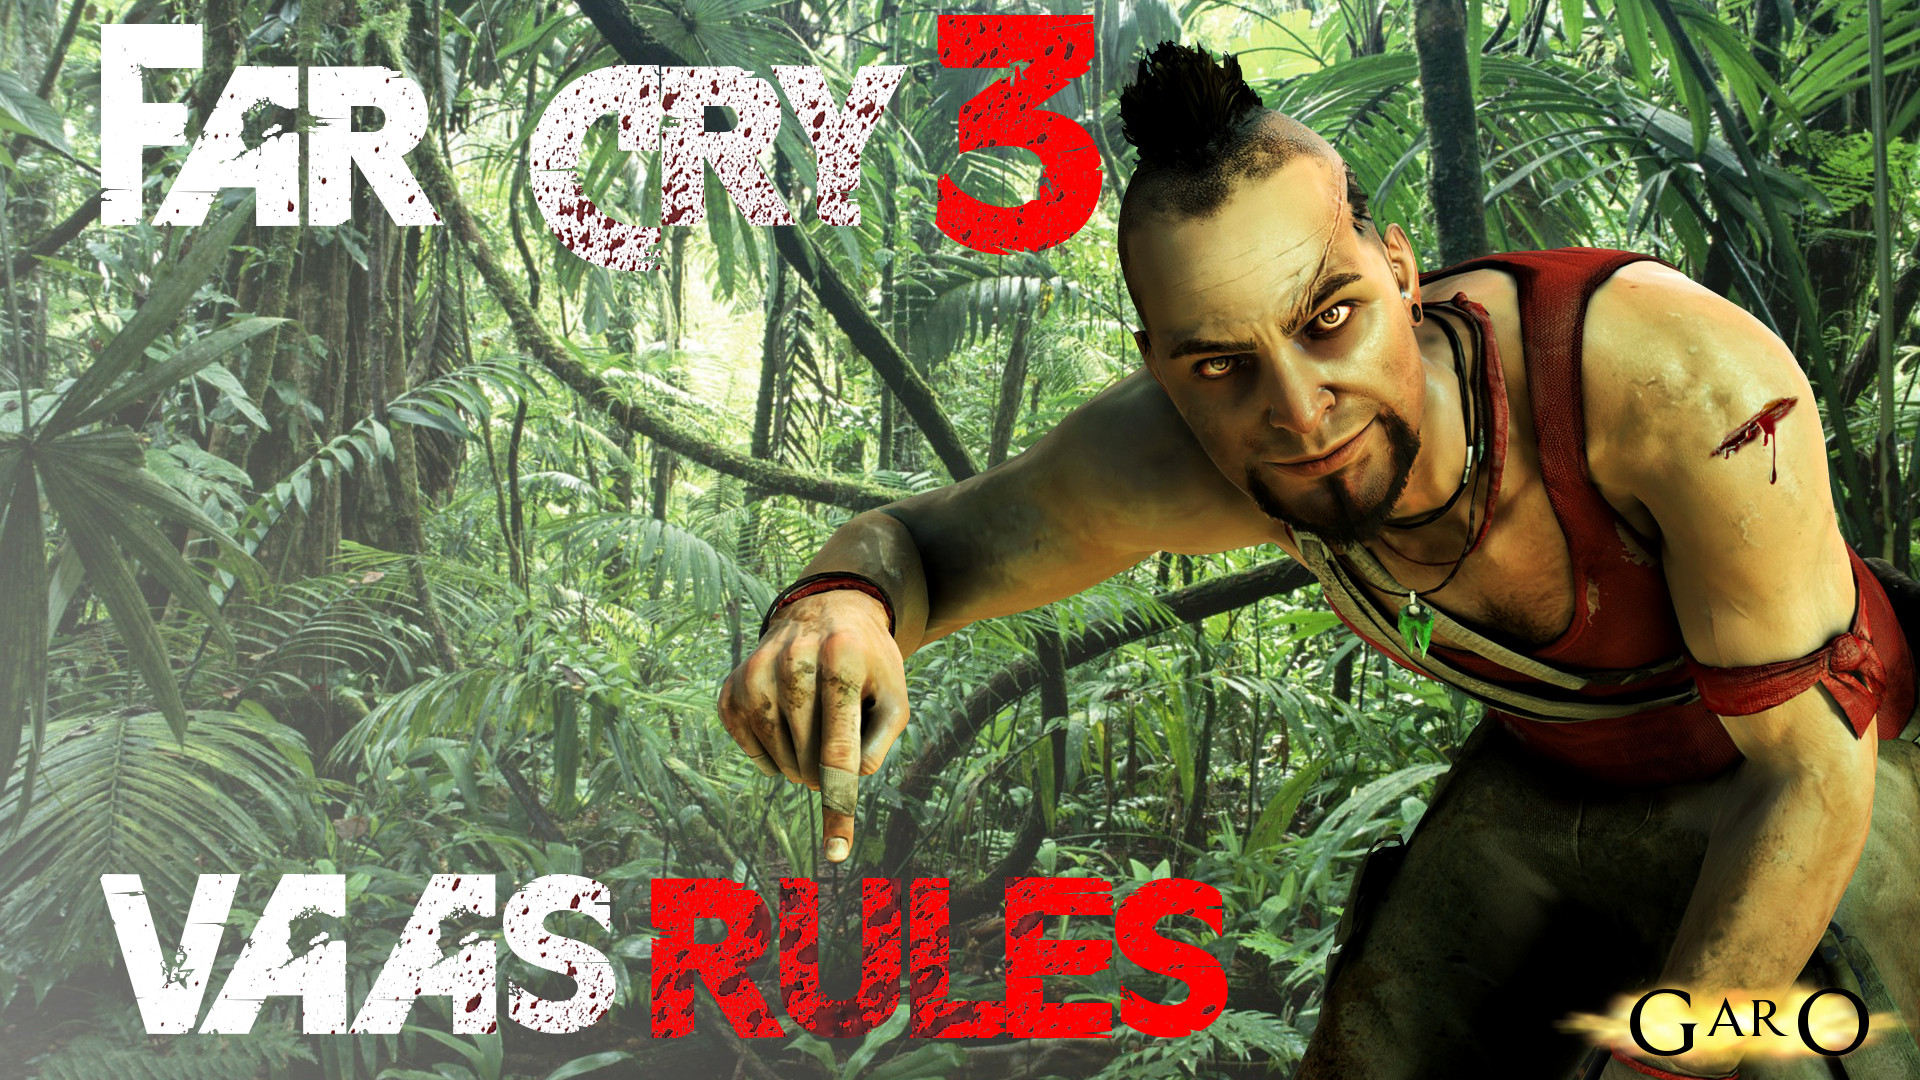 1920x1080 ... Far Cry 3 Wallpaper | Vaas rules by GaroArts